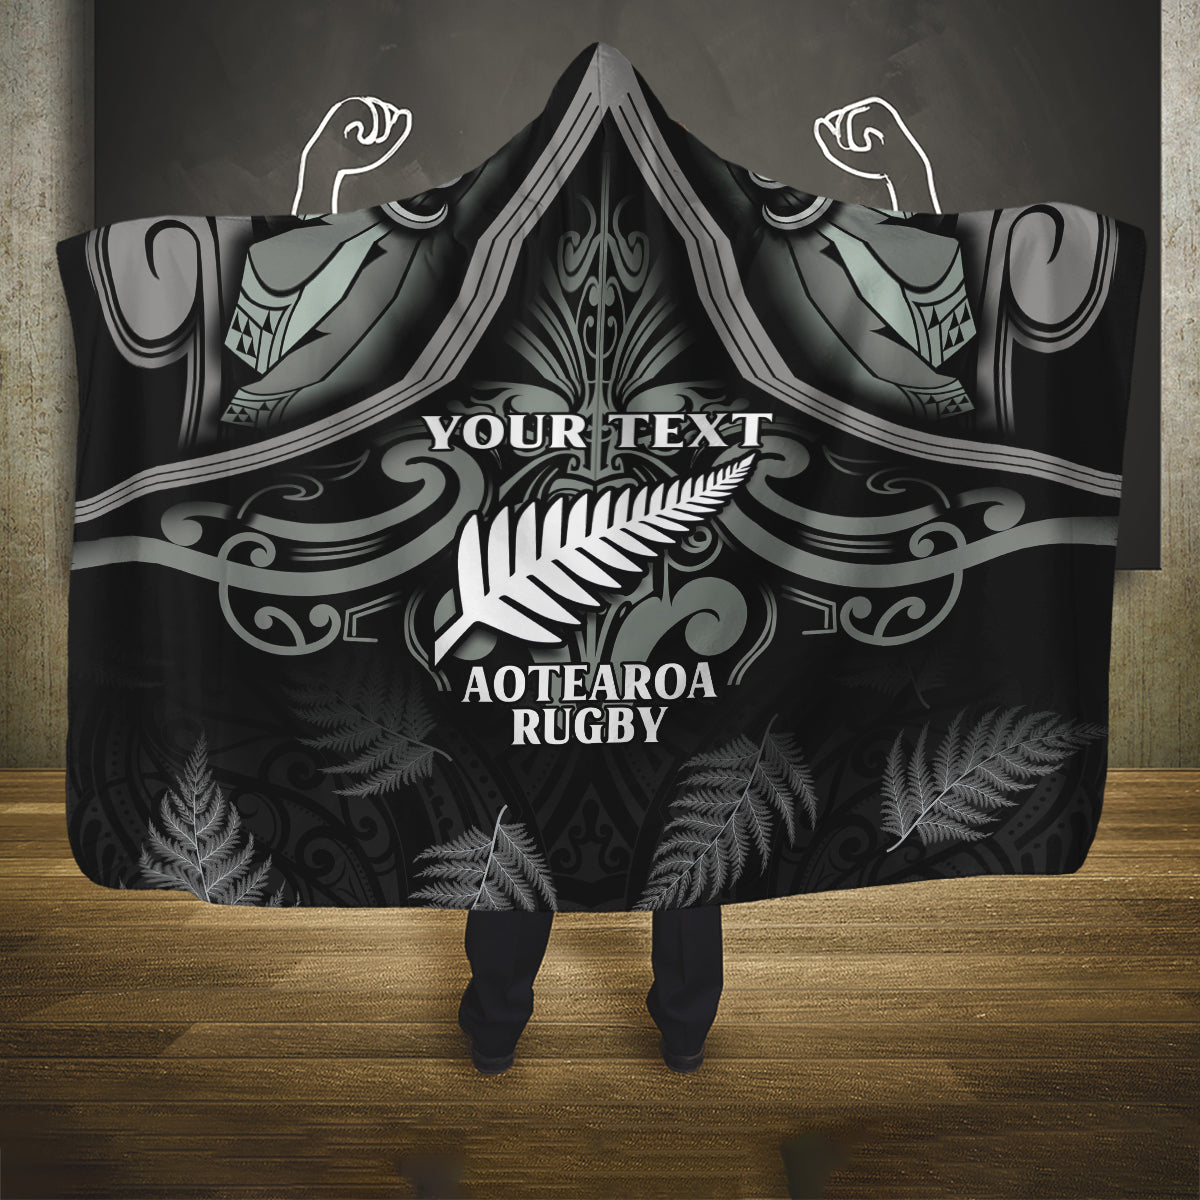 Custom New Zealand Silver Fern Rugby Hooded Blanket All Black Since 1892 Aotearoa Moko Maori